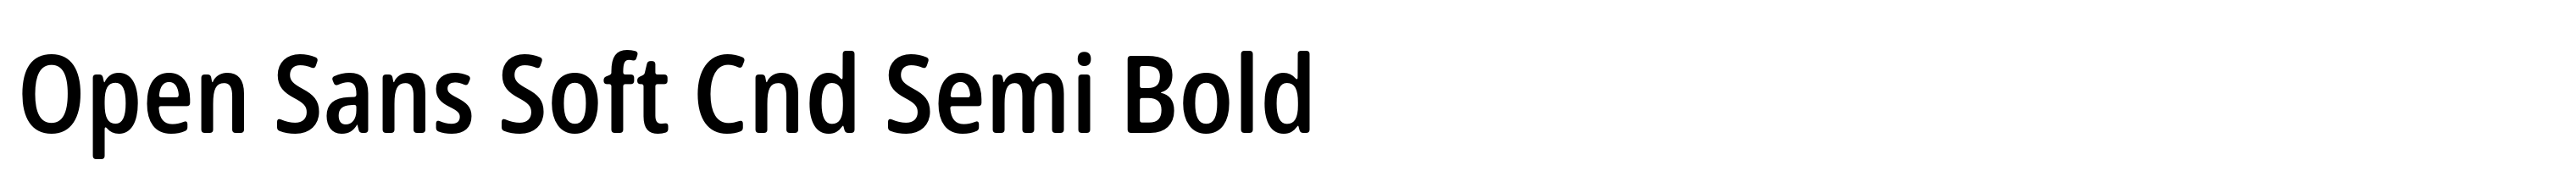 Open Sans Soft Cnd Semi Bold